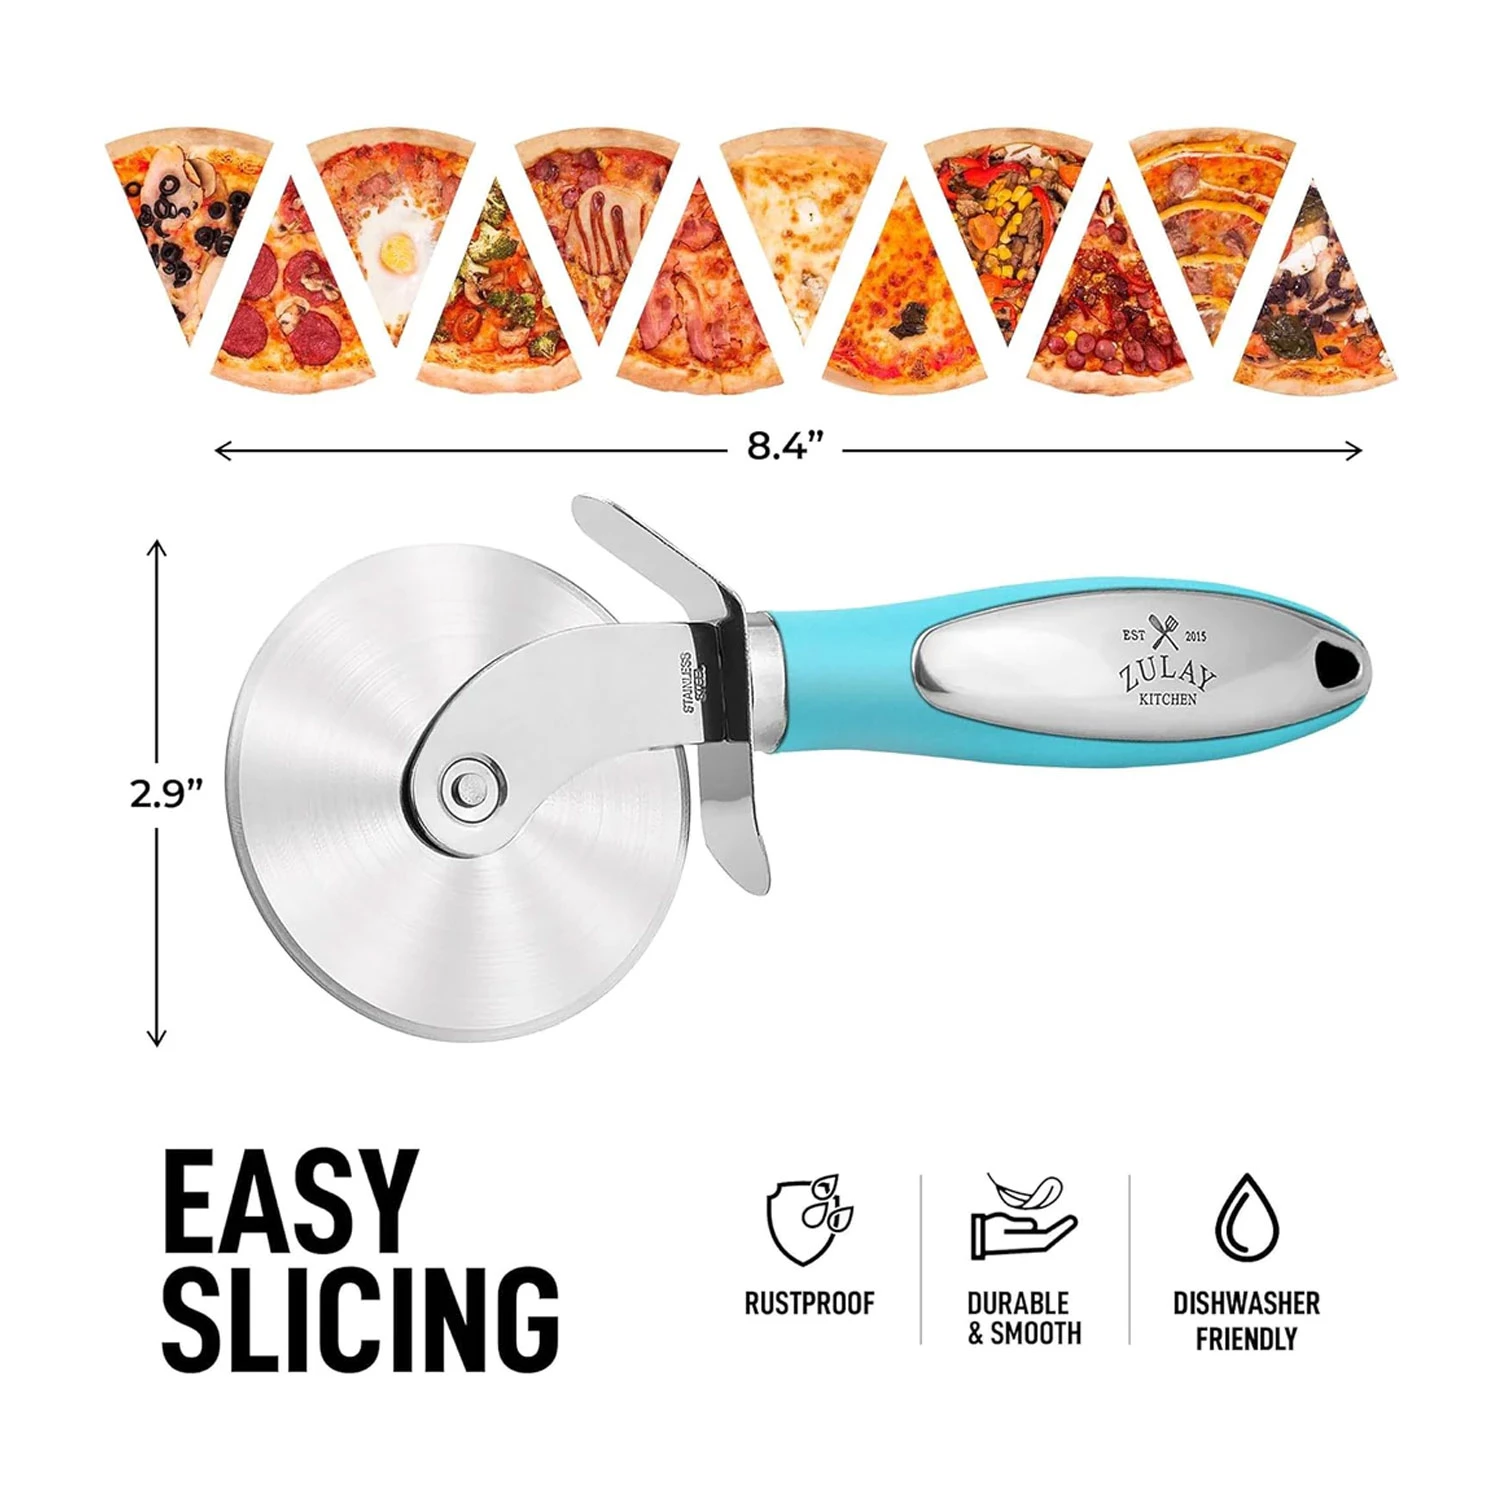 Pizza Cutter Wheel With Non Slip Ergonomic Handle